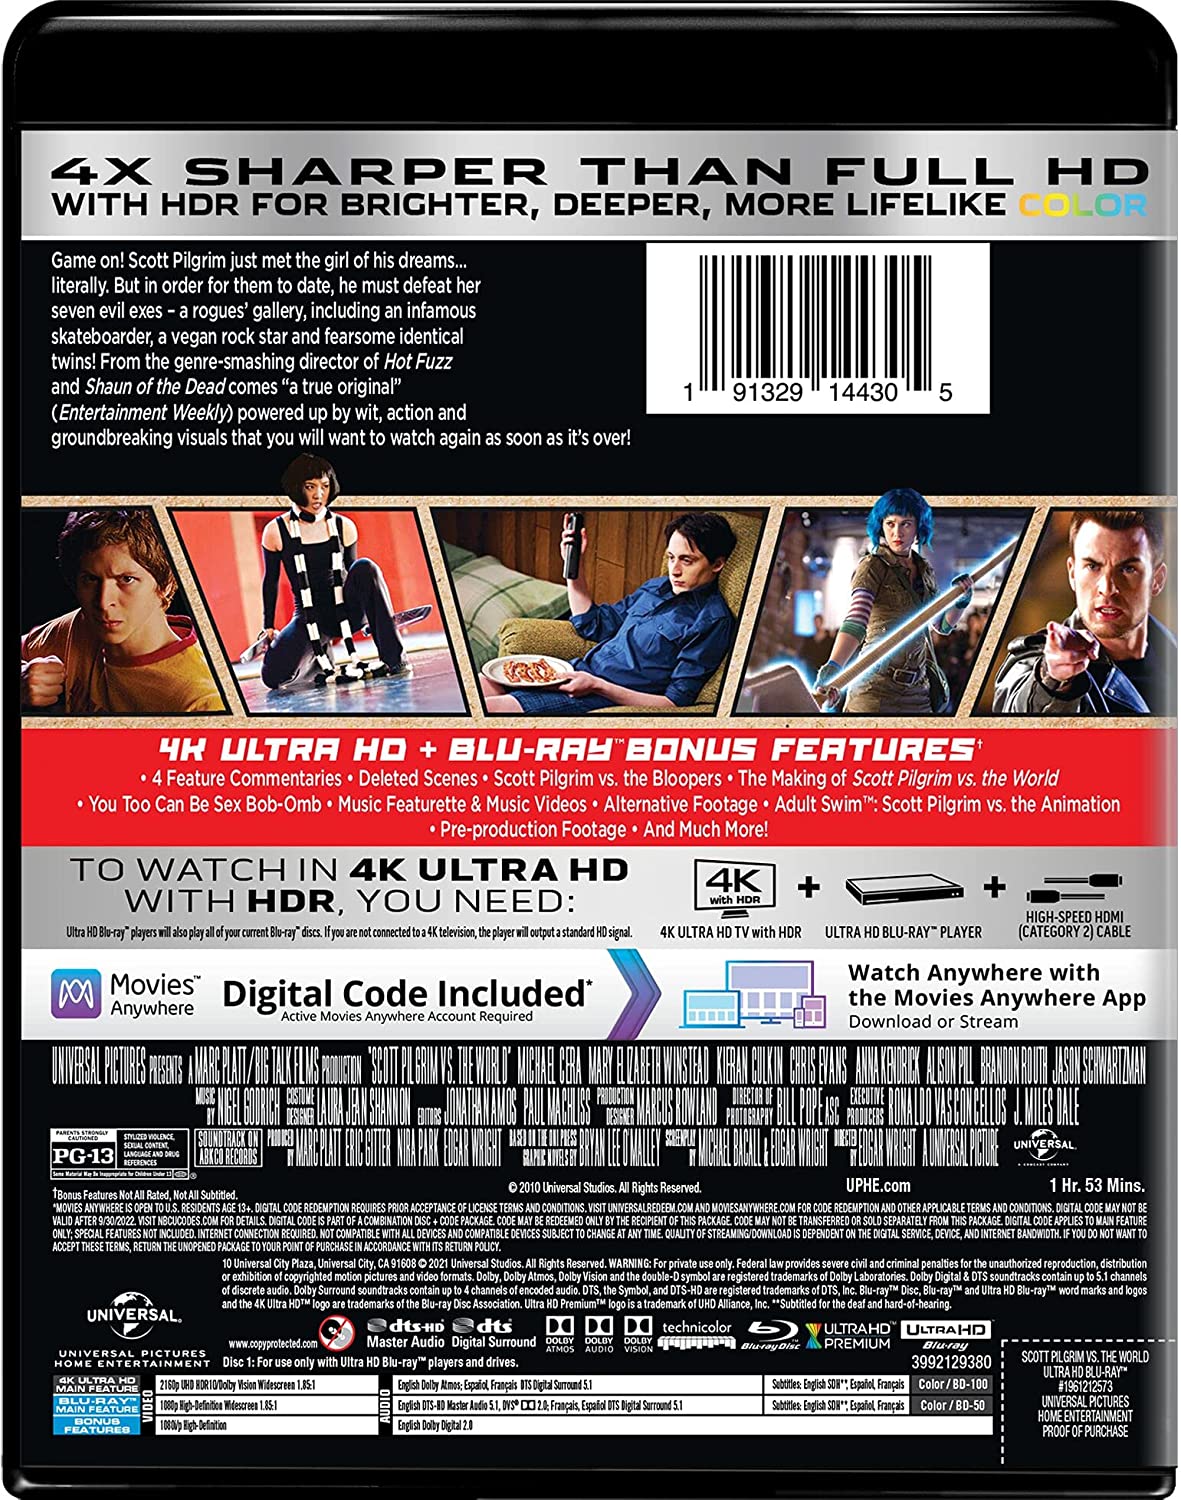 Scott Pilgrim vs. The World 4k Blu-ray back